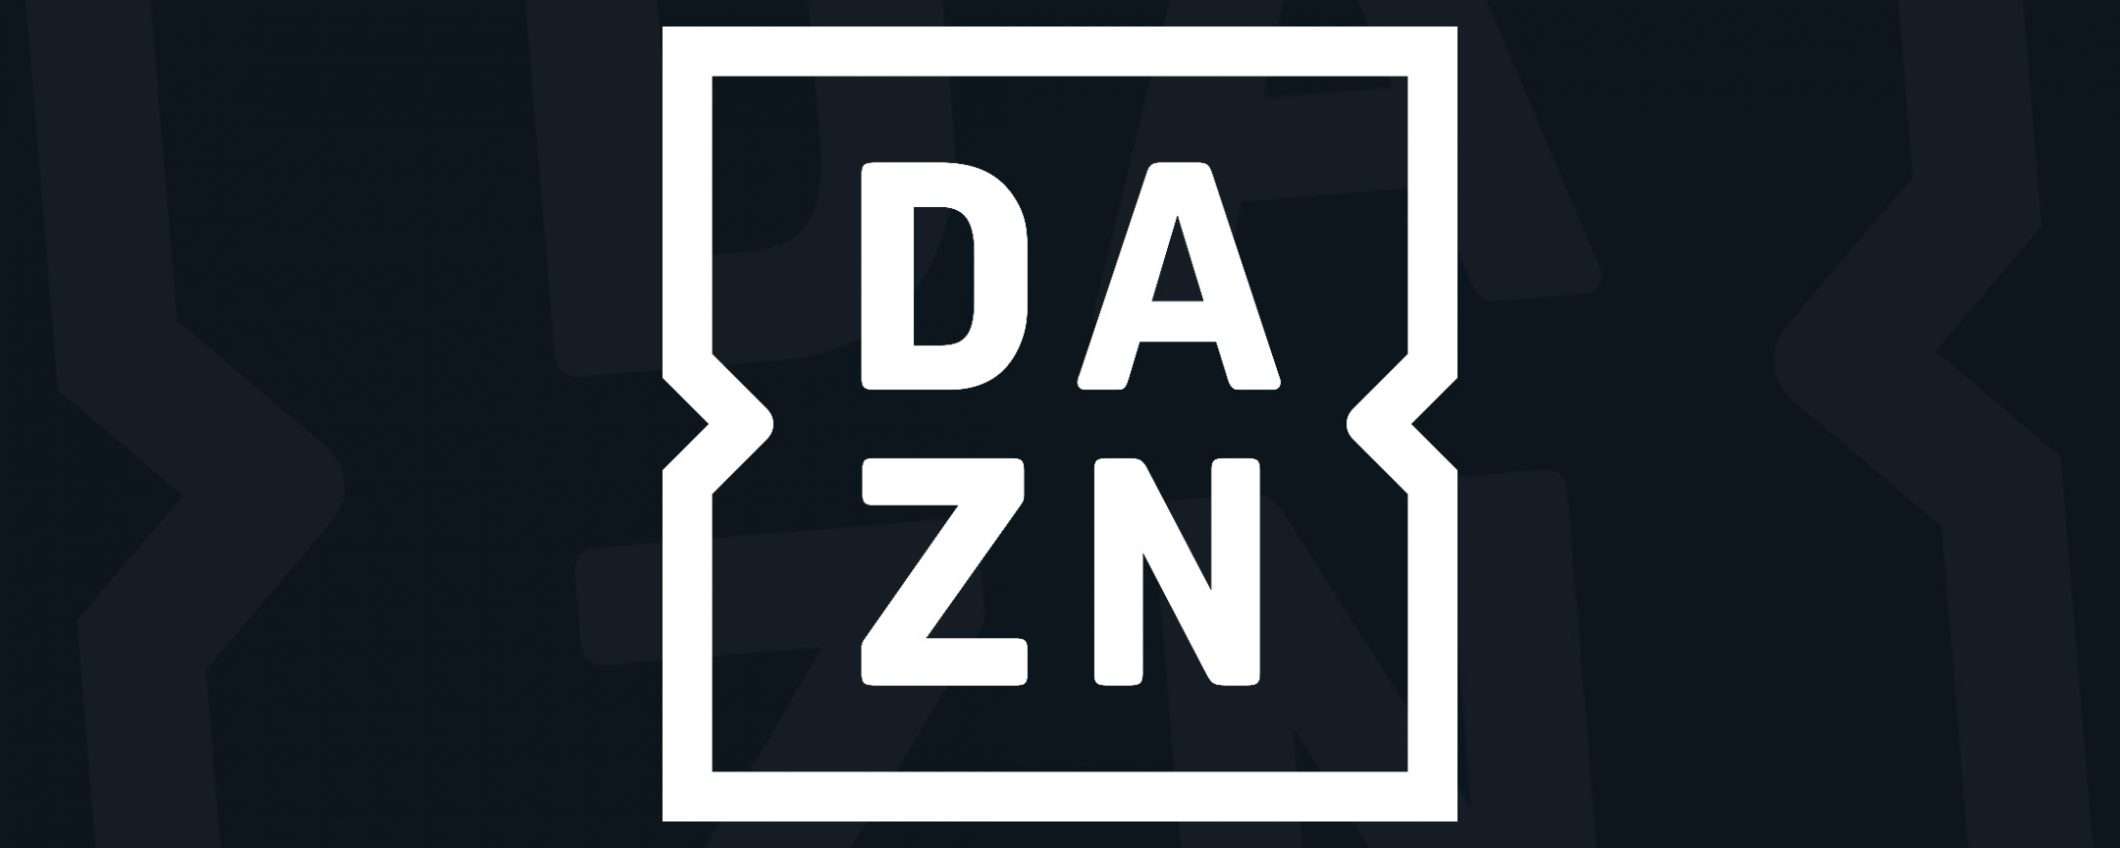 Adiconsum: DAZN deve trasmettere le partite in TV